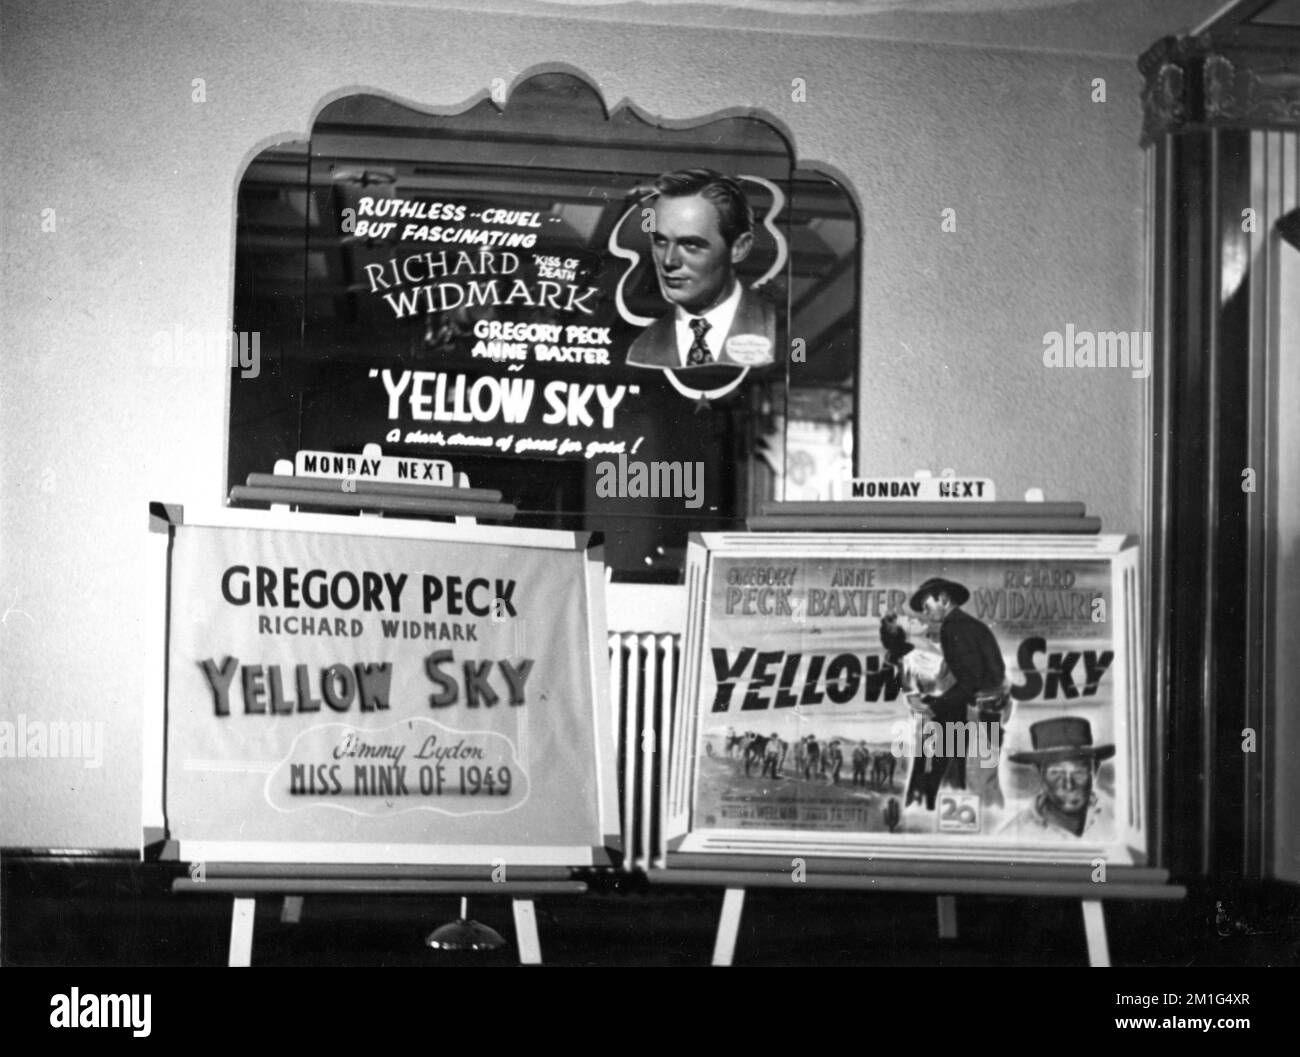 Lobby Display in the Ritz - ABC Cinema in Cleethorpes, Lincolnshire, Inghilterra nel 1949 per GREGORY PECK ANNE BAXTER e RICHARD WIDMARK in GIALLO CIELO direttore WILLIAM A. WELLMAN Twentieth Century Fox Foto Stock